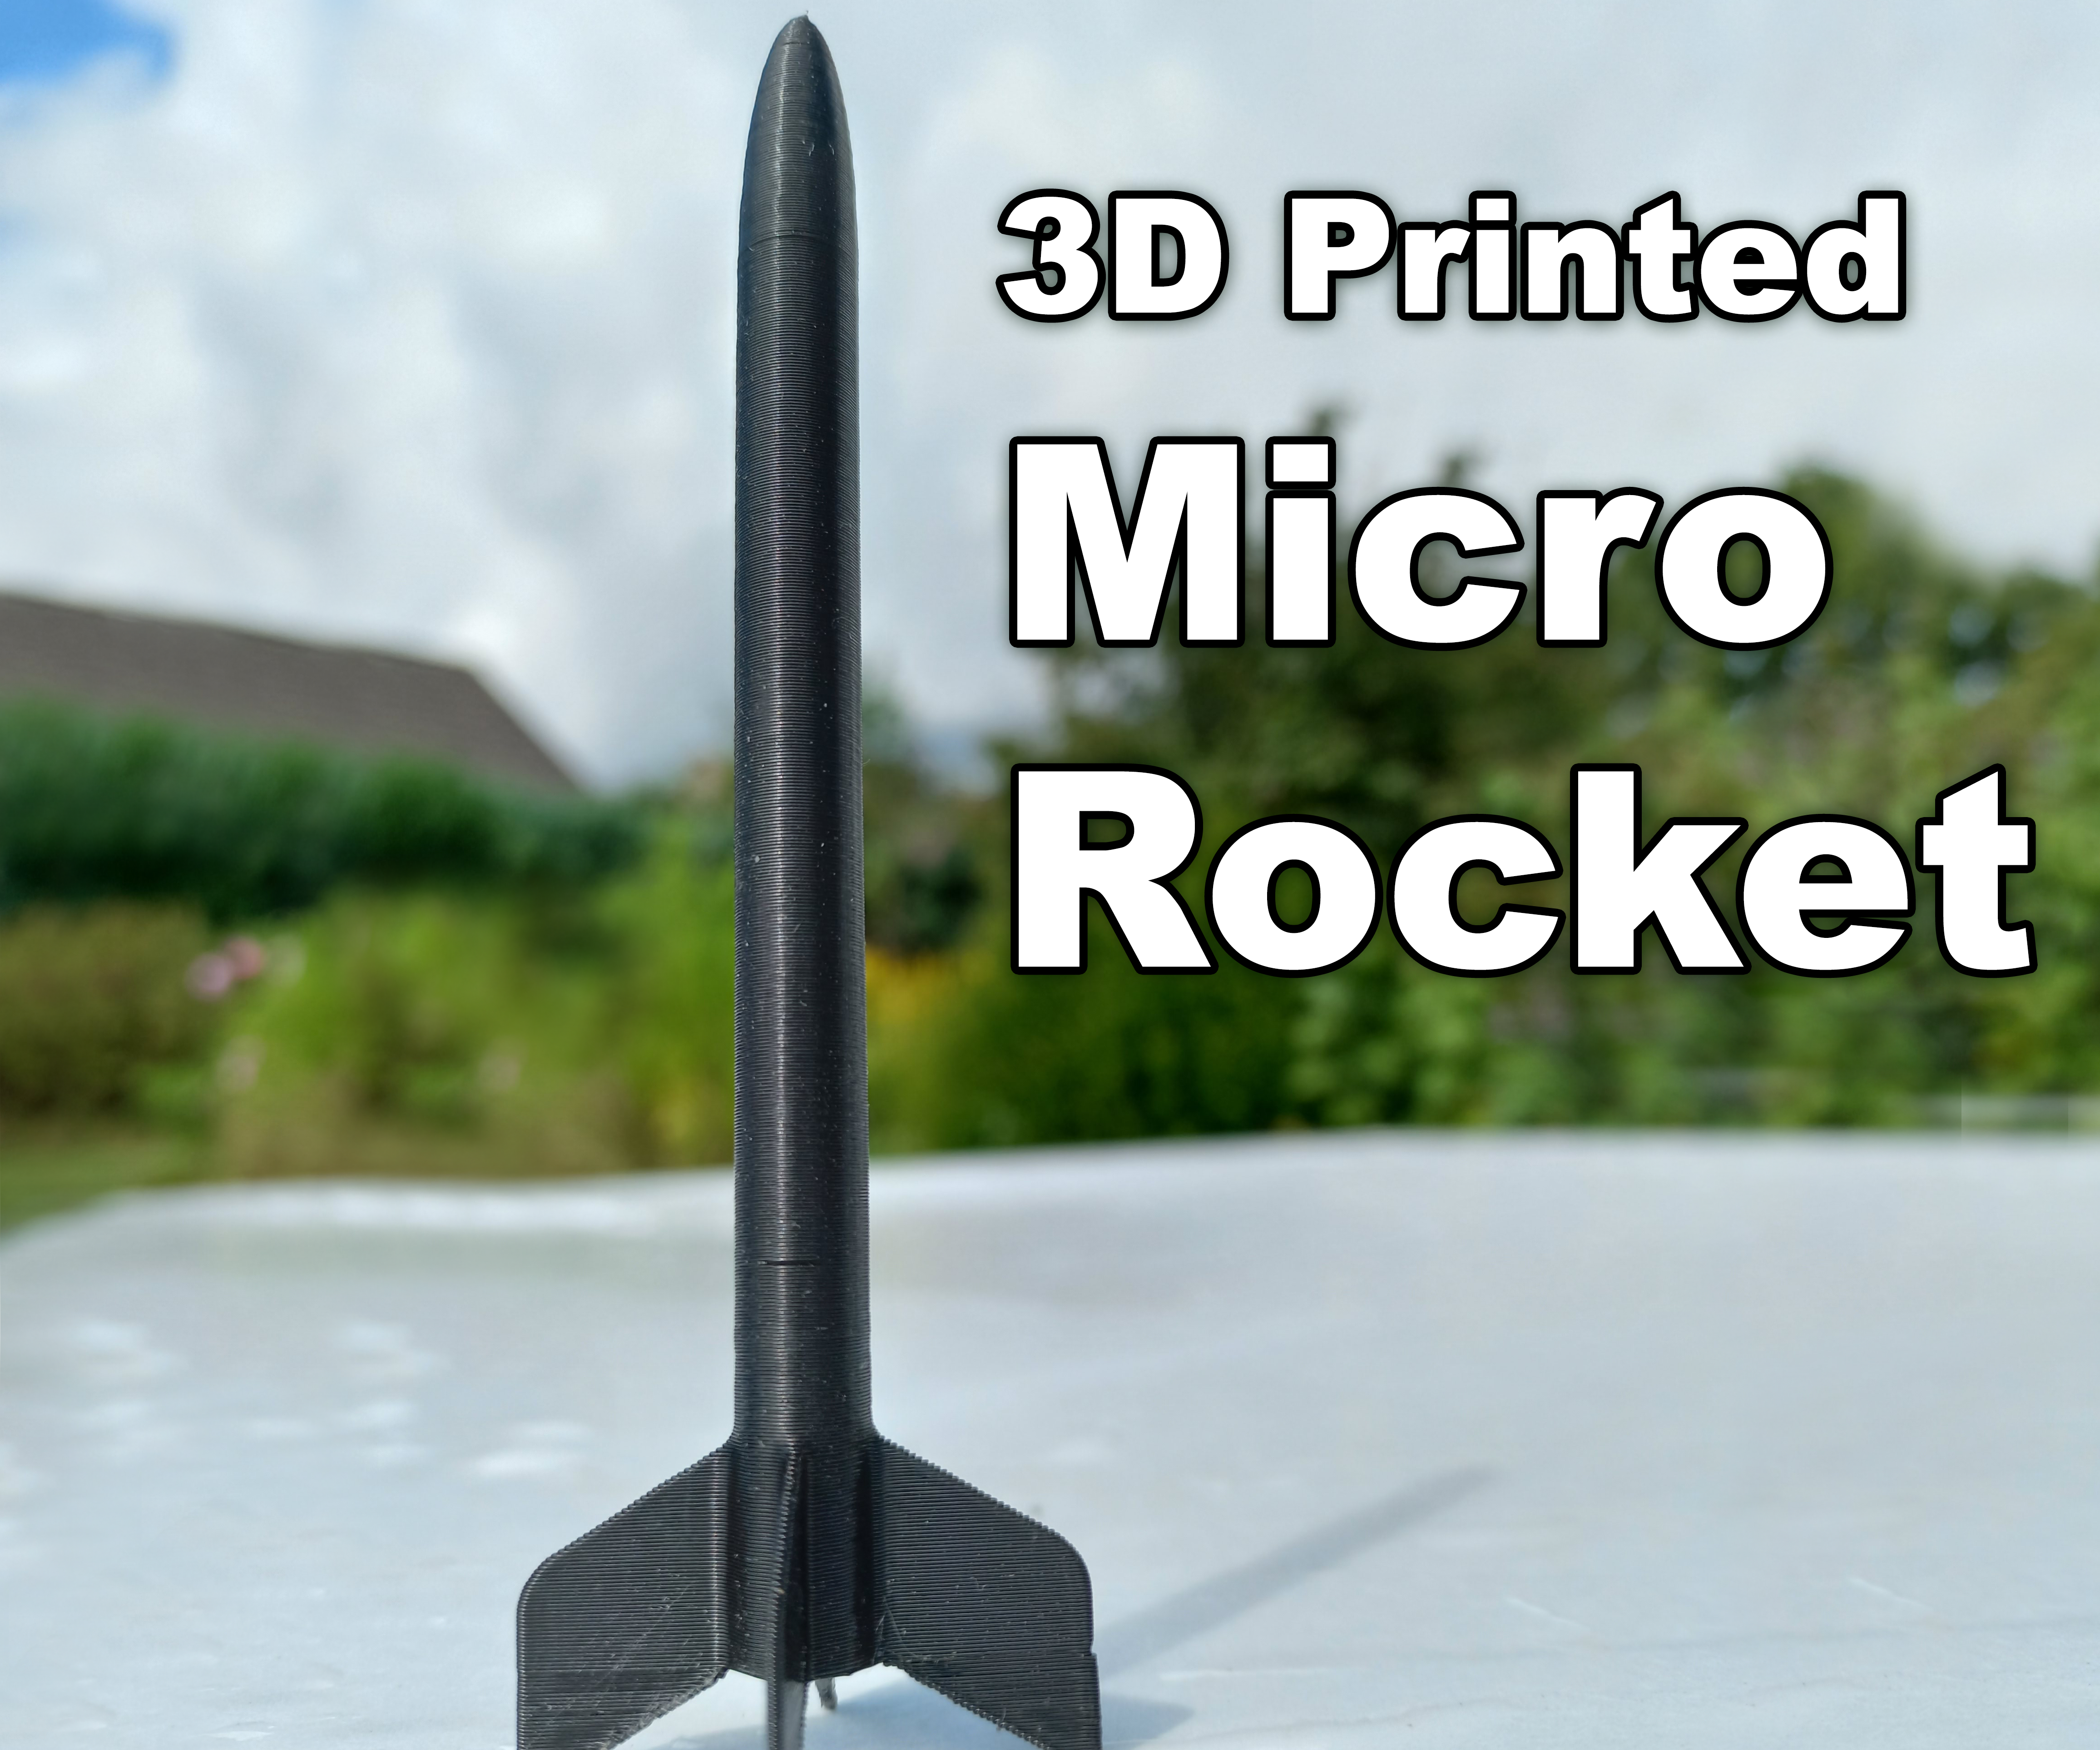 3D Printed Micro Rocket